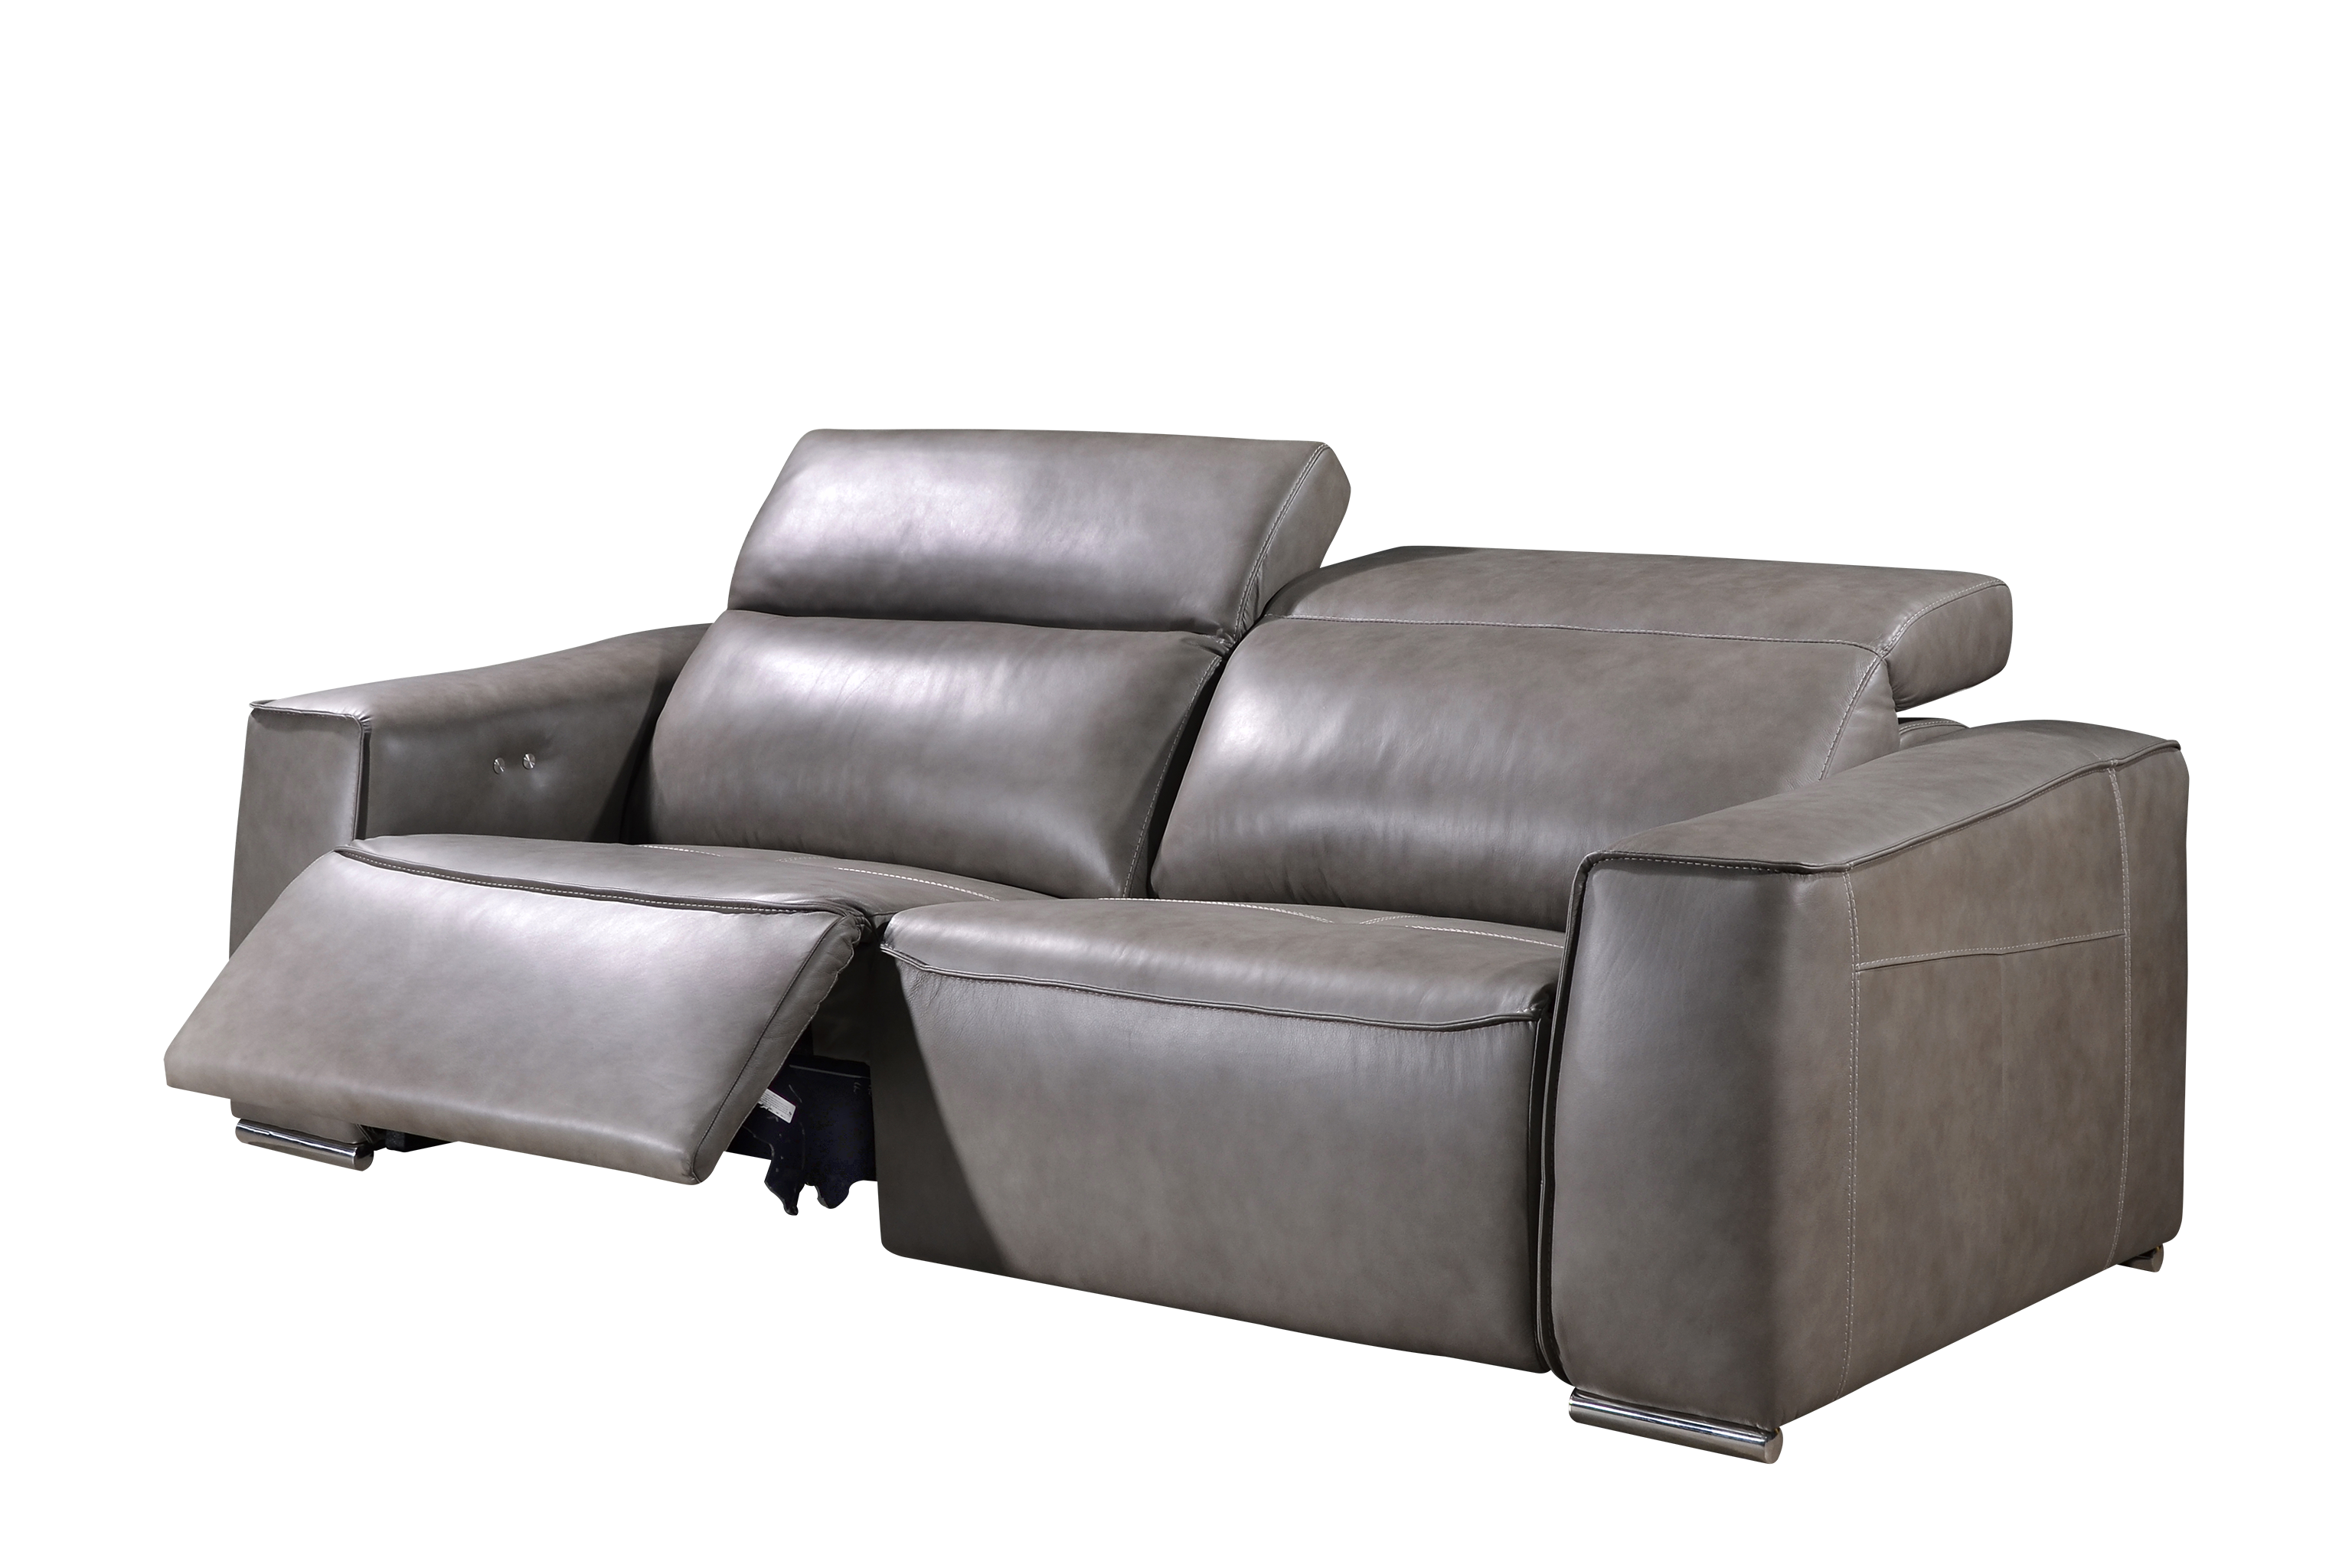 HENRIETTA 2.5 Seater Recliner Sofa in Leather by Castilla